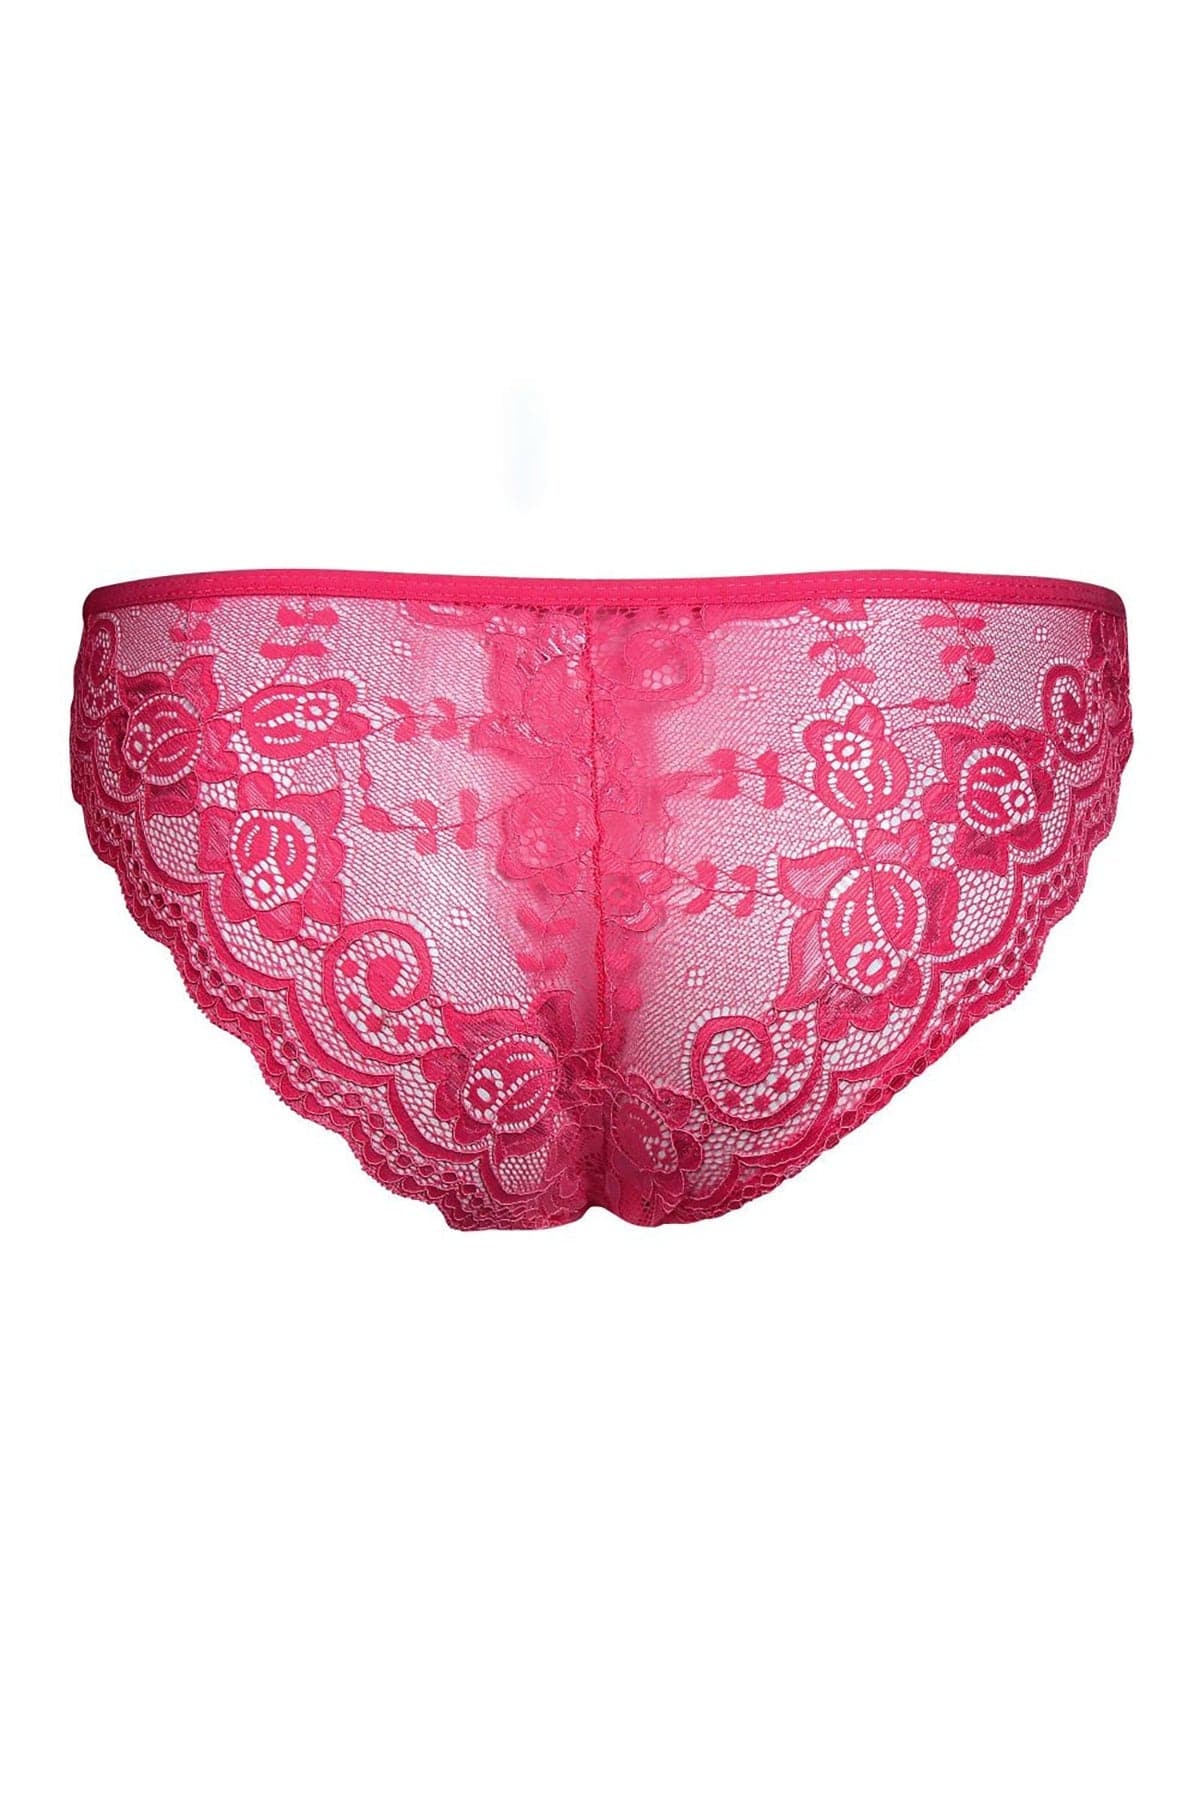 British Lingerie Studio Lulu Lace Panty - Fuchsia - Premium Panties from BLS - Just Rs 600! Shop now at Cozmetica